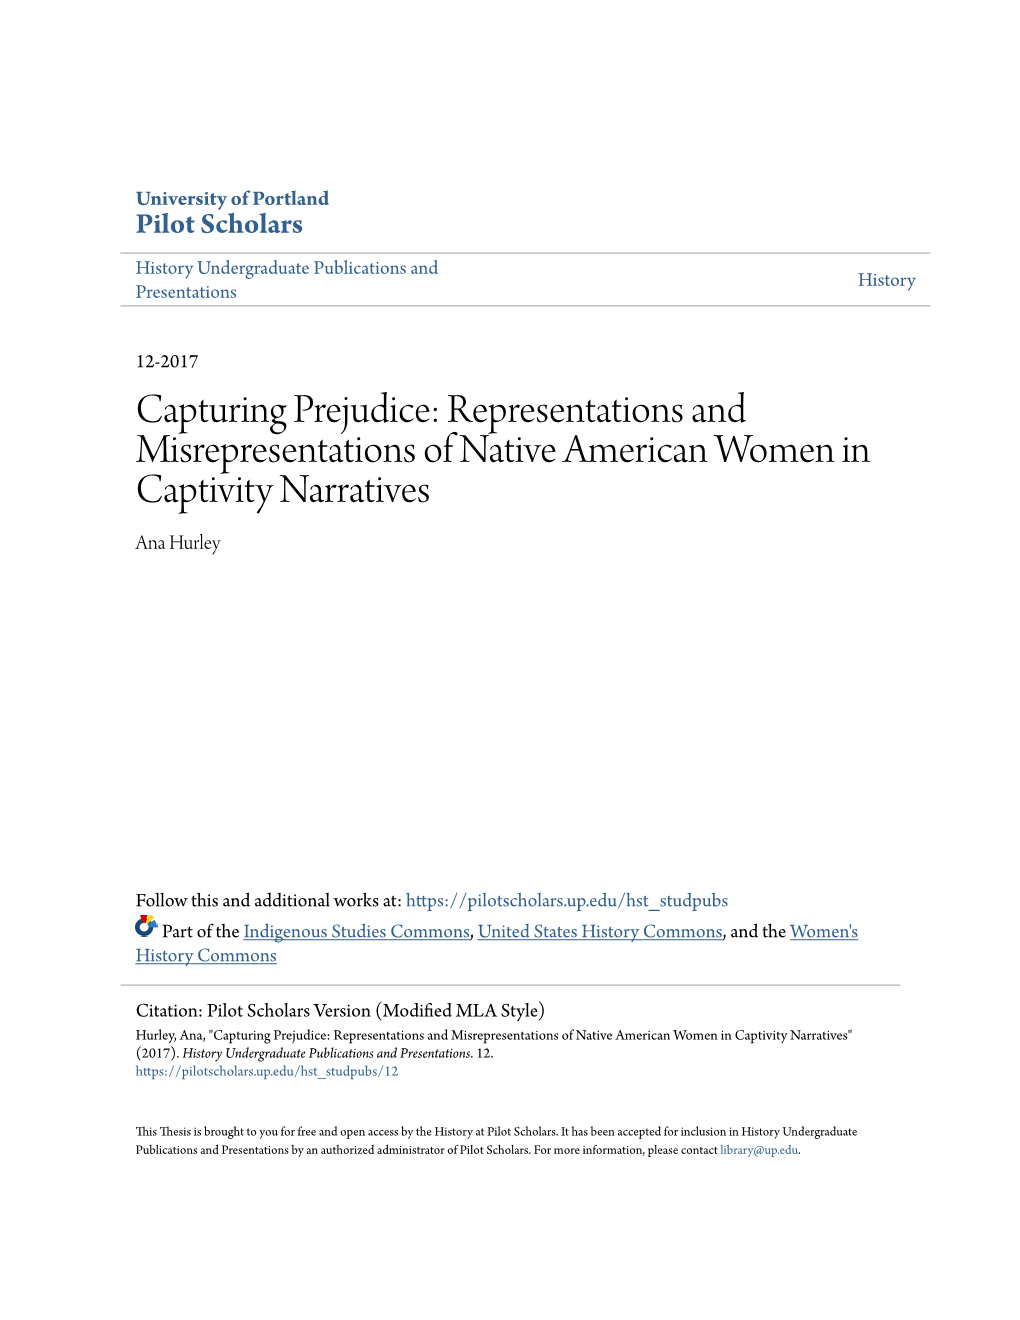 Capturing Prejudice: Representations and Misrepresentations of Native American Women in Captivity Narratives Ana Hurley